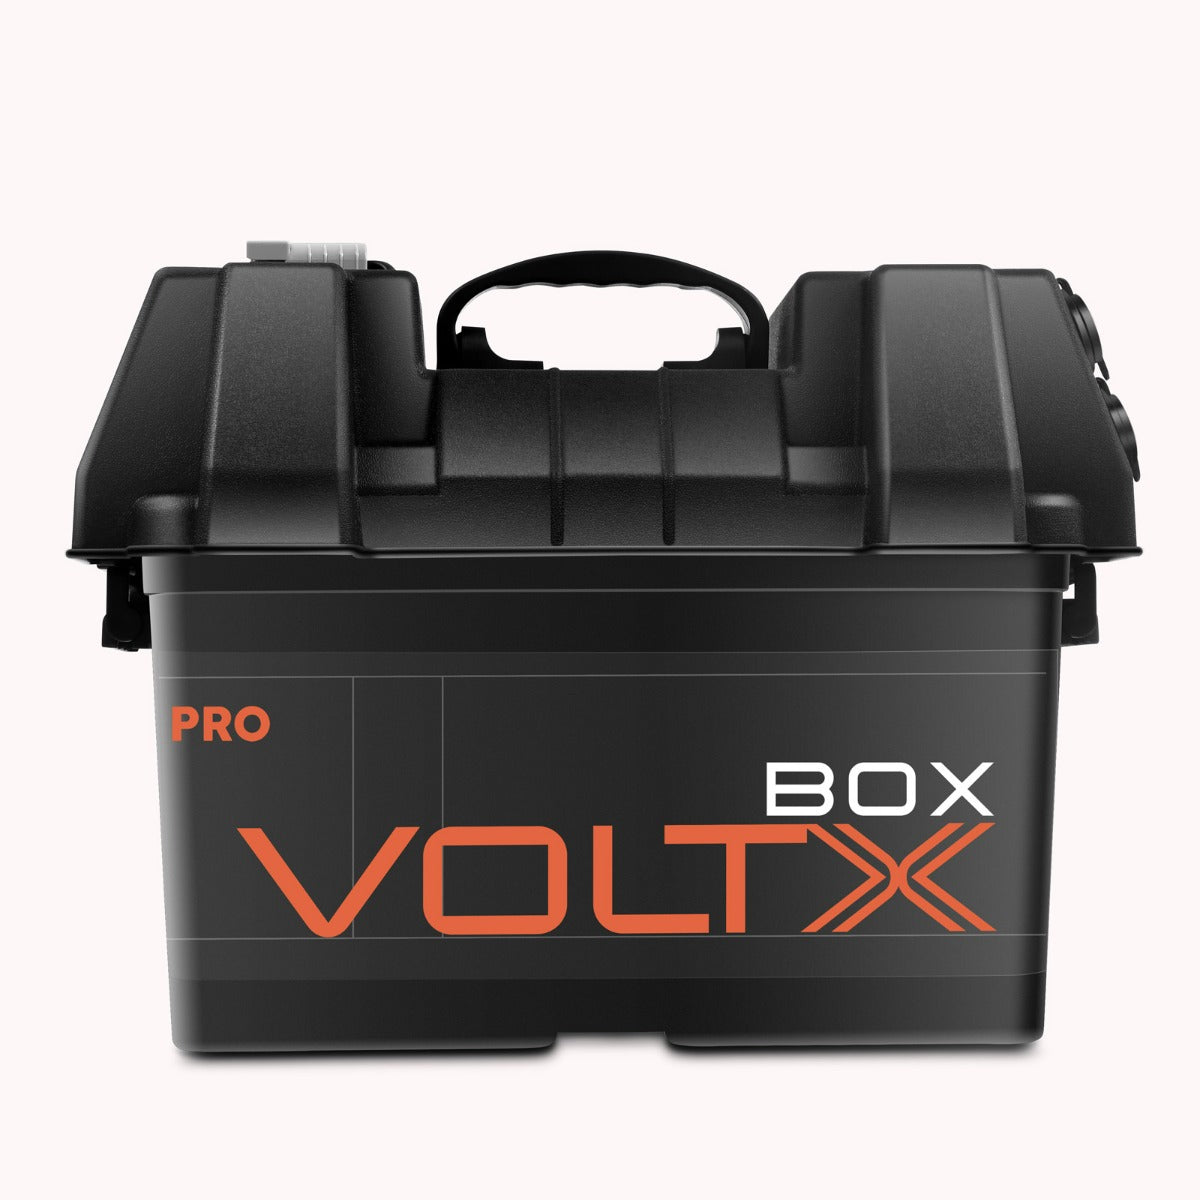 VoltX Battery Box Pro